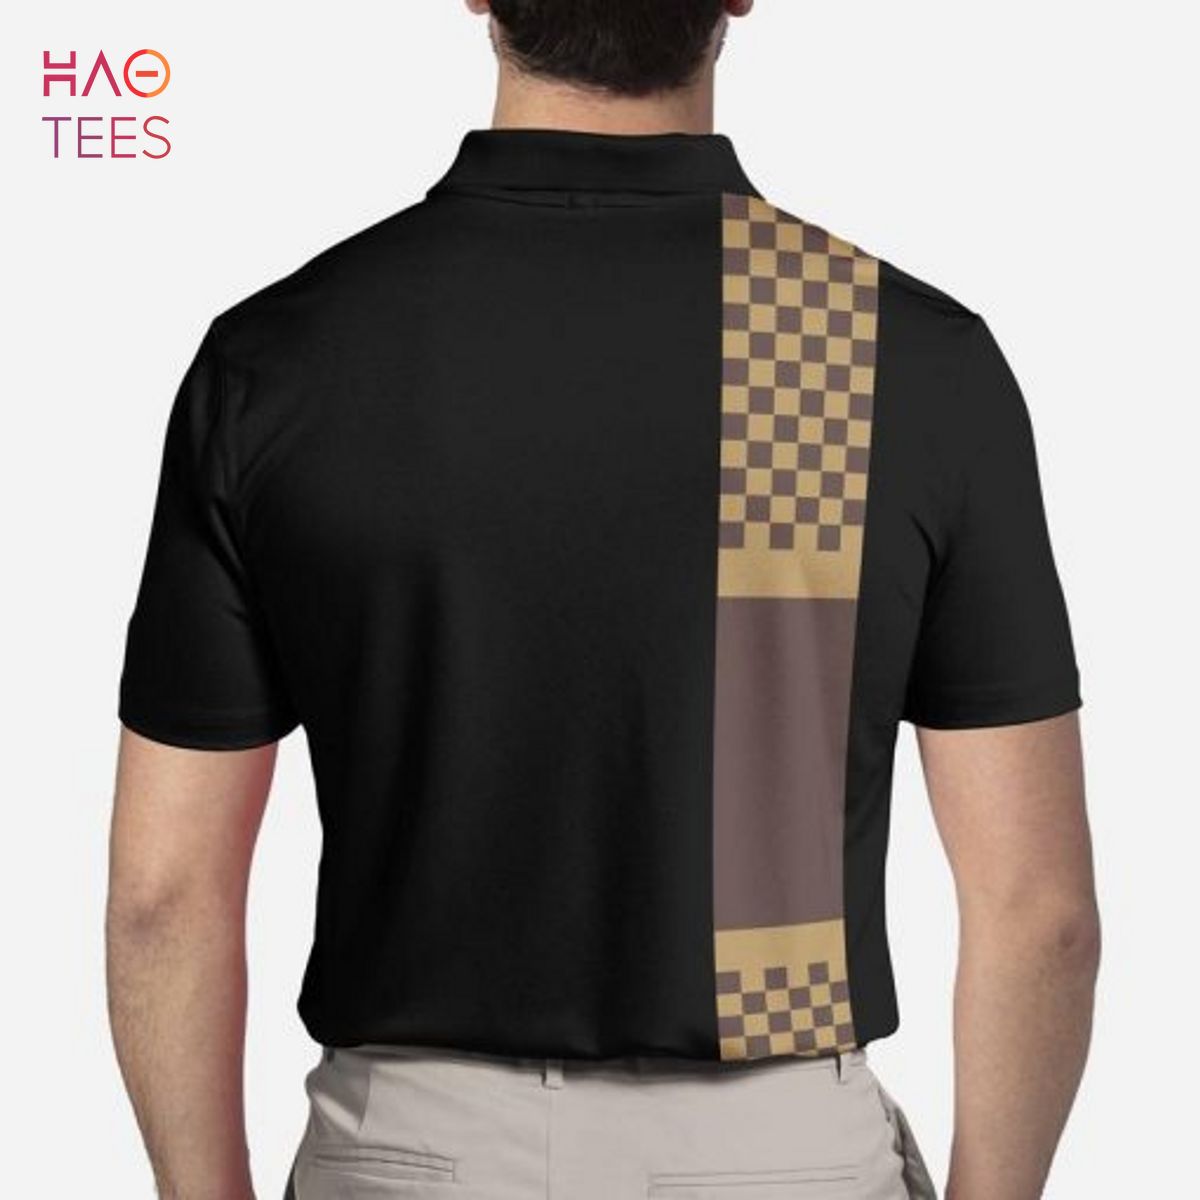 HOT Louis Vuitton Gold Black Polo • Shirtnation - Shop trending t-shirts  online in US